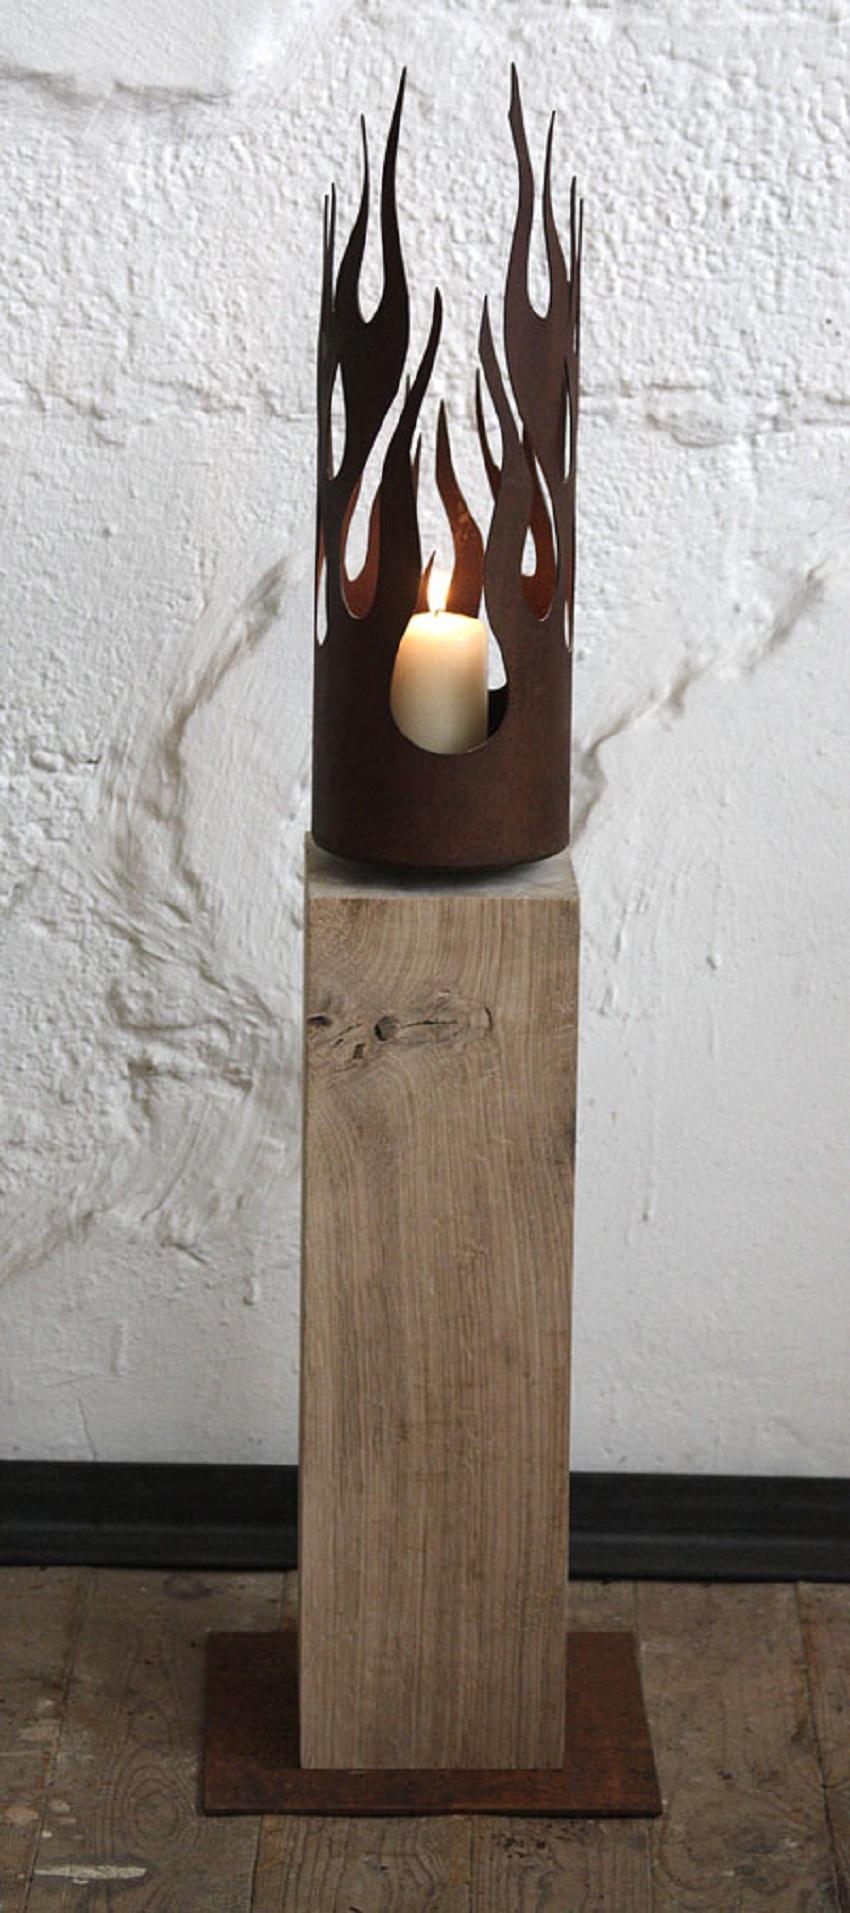 Unique Candle Holder - "Flames" on a natural oak pedestal - Medium Height - Mixed Media Art by Stefan Traloc